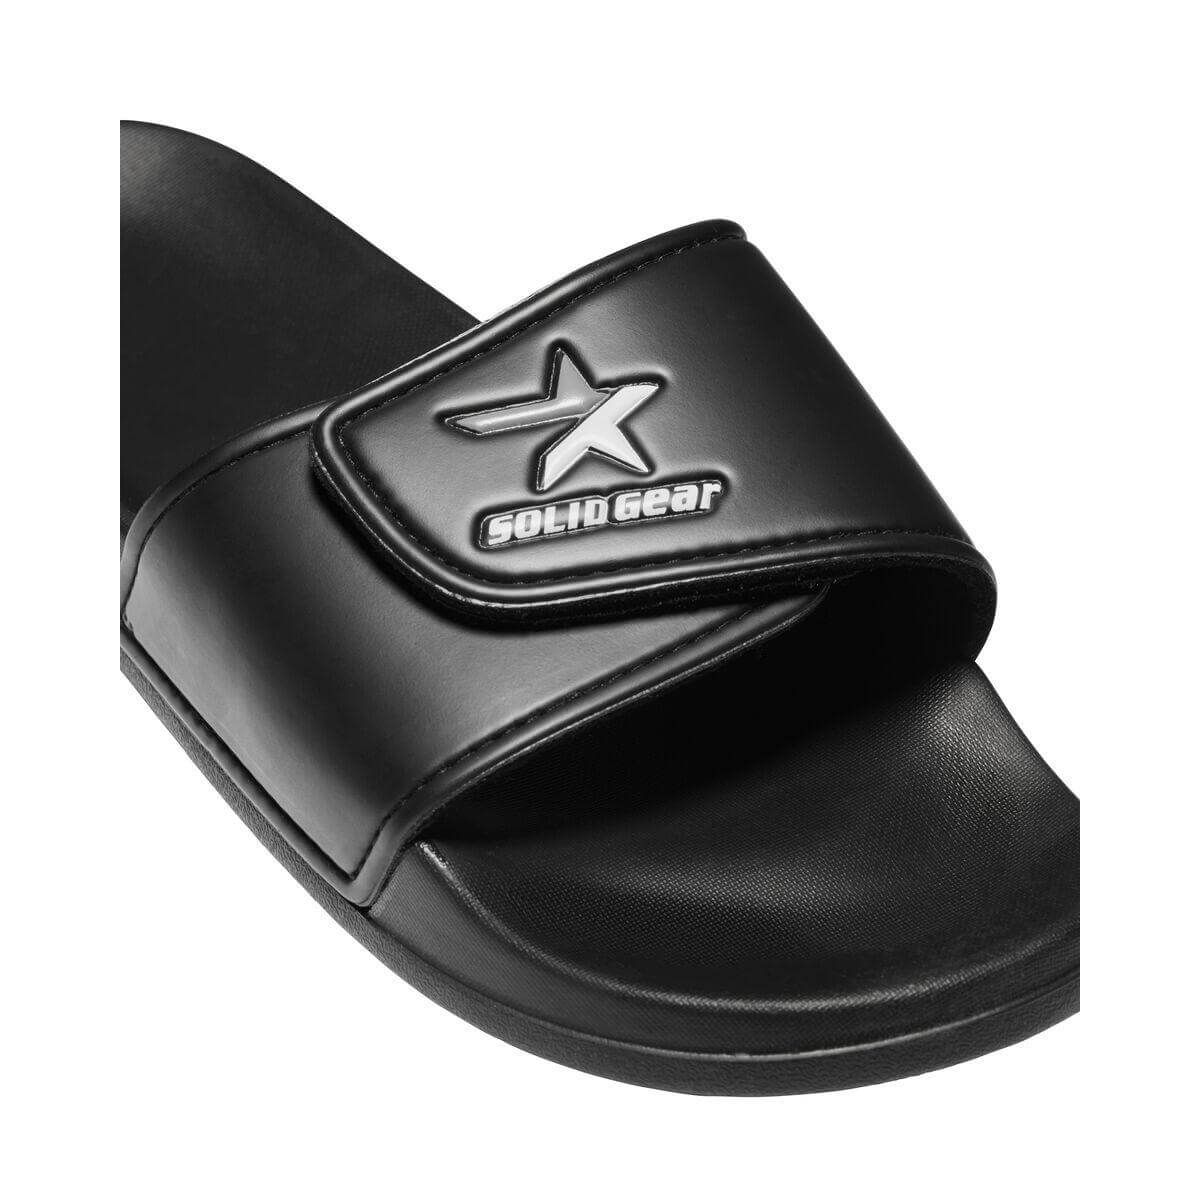 Solid Gear 10101 SLIDE MOON Non Safety Flip Flop Sandals Black 06 #colour_black